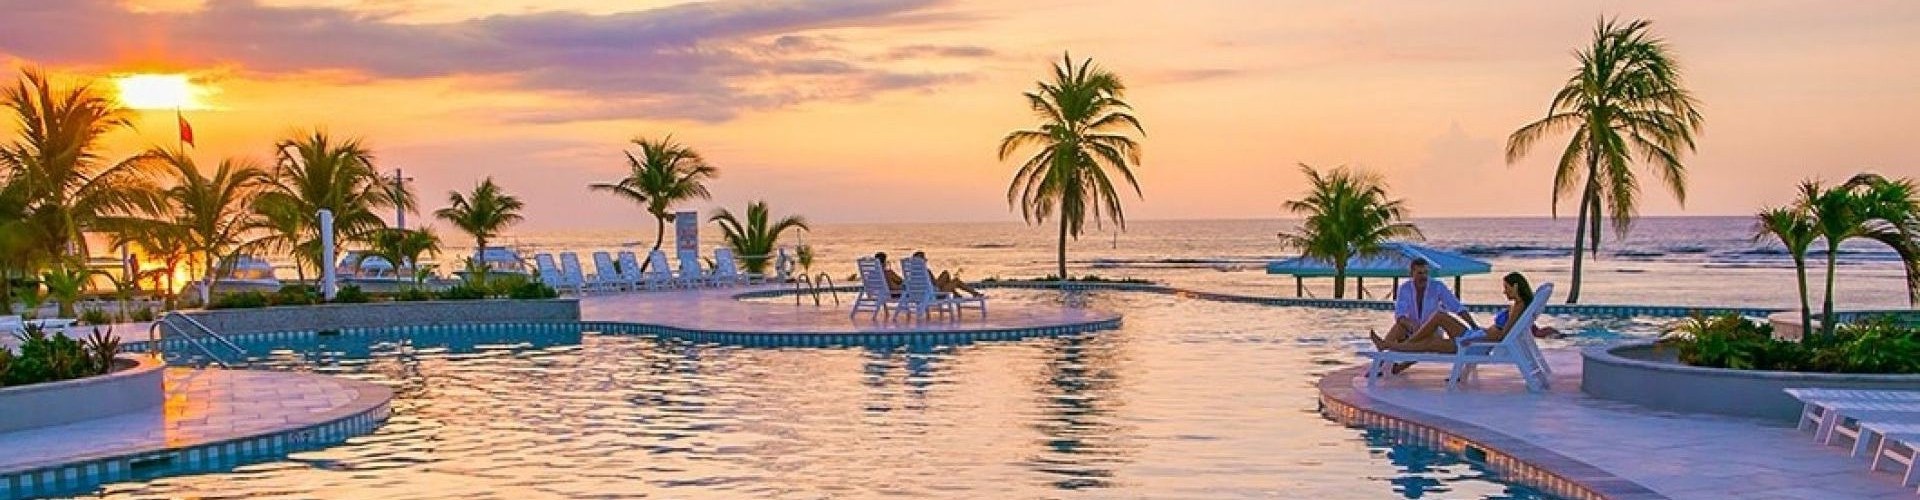 1 - Cayman Brac Sunset